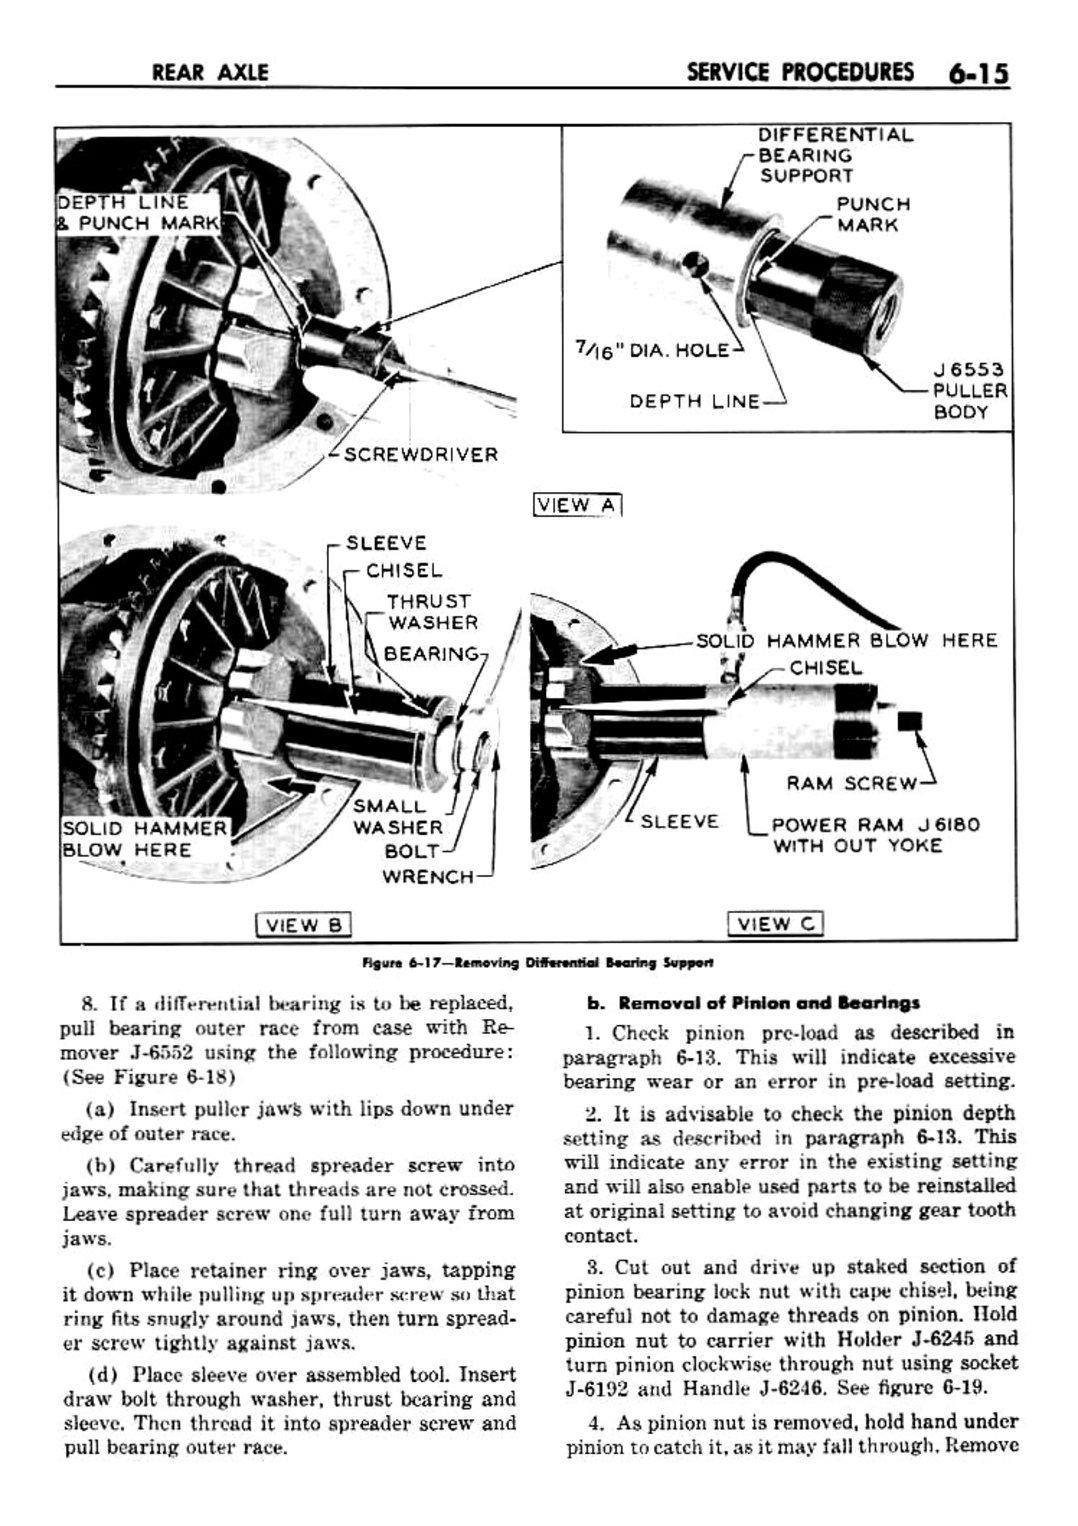 n_07 1959 Buick Shop Manual - Rear Axle-015-015.jpg